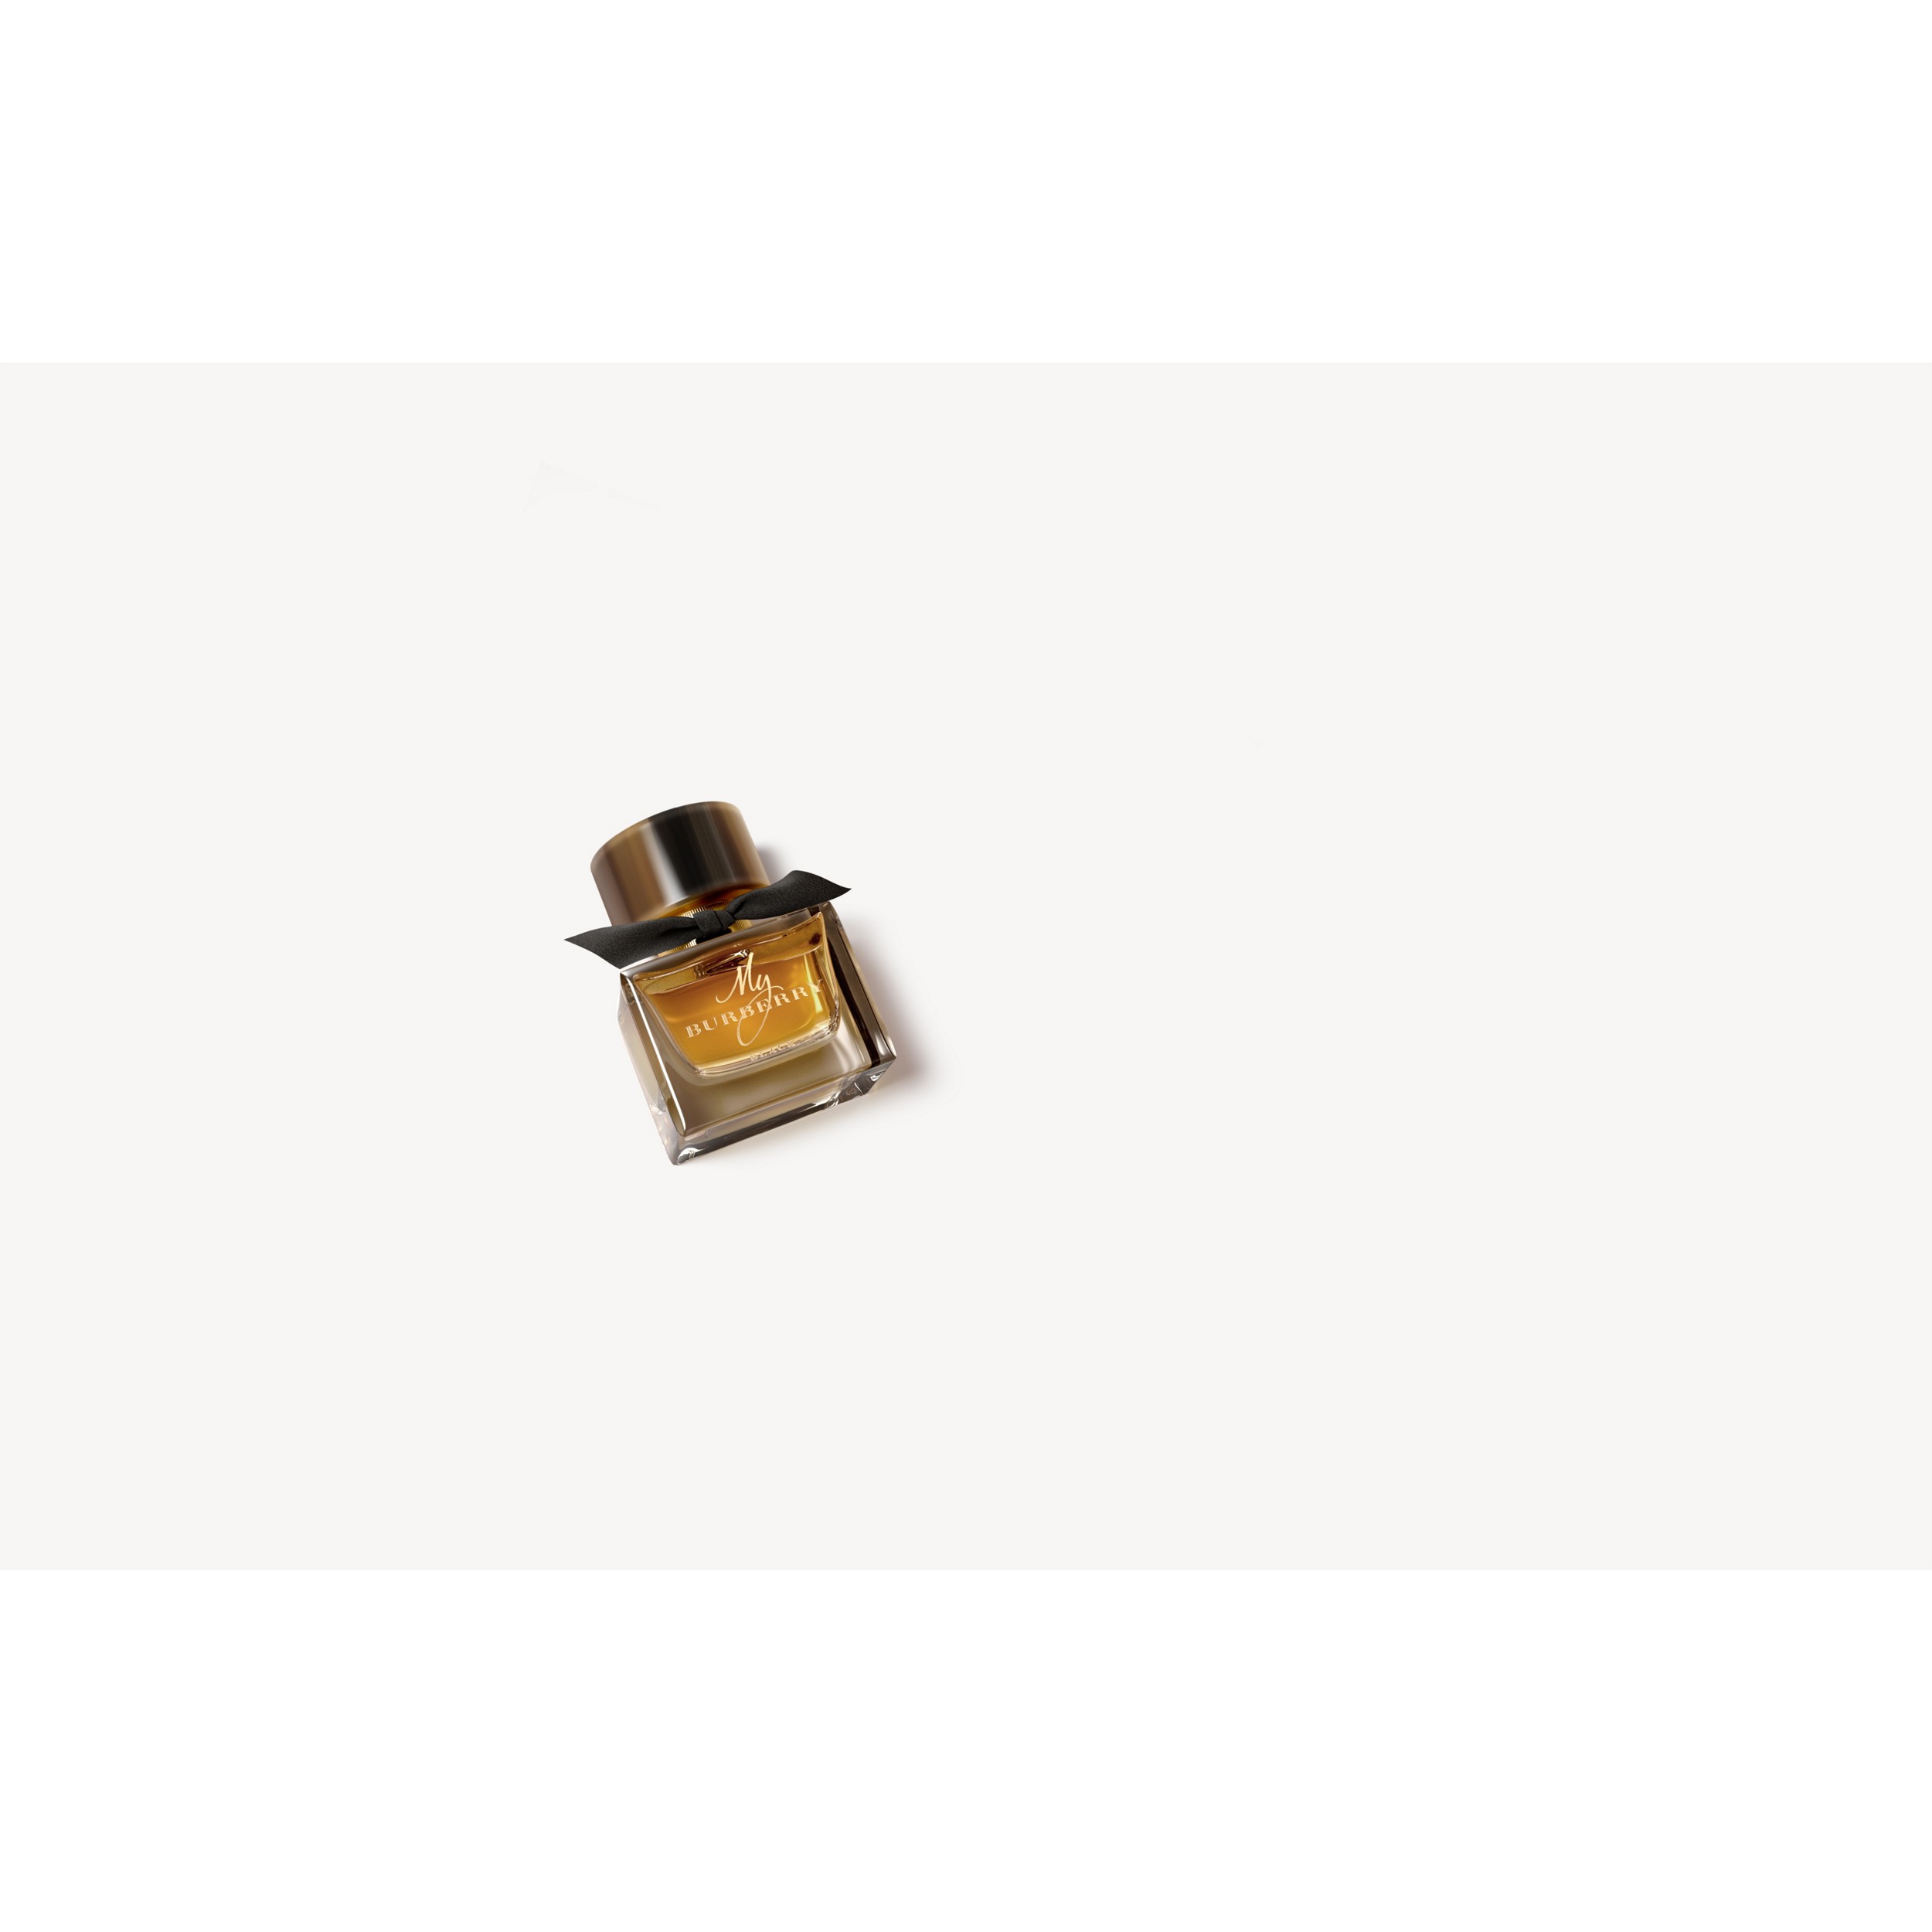 My Burberry Black Parfum 50ml - Women | Burberry® Official - 2